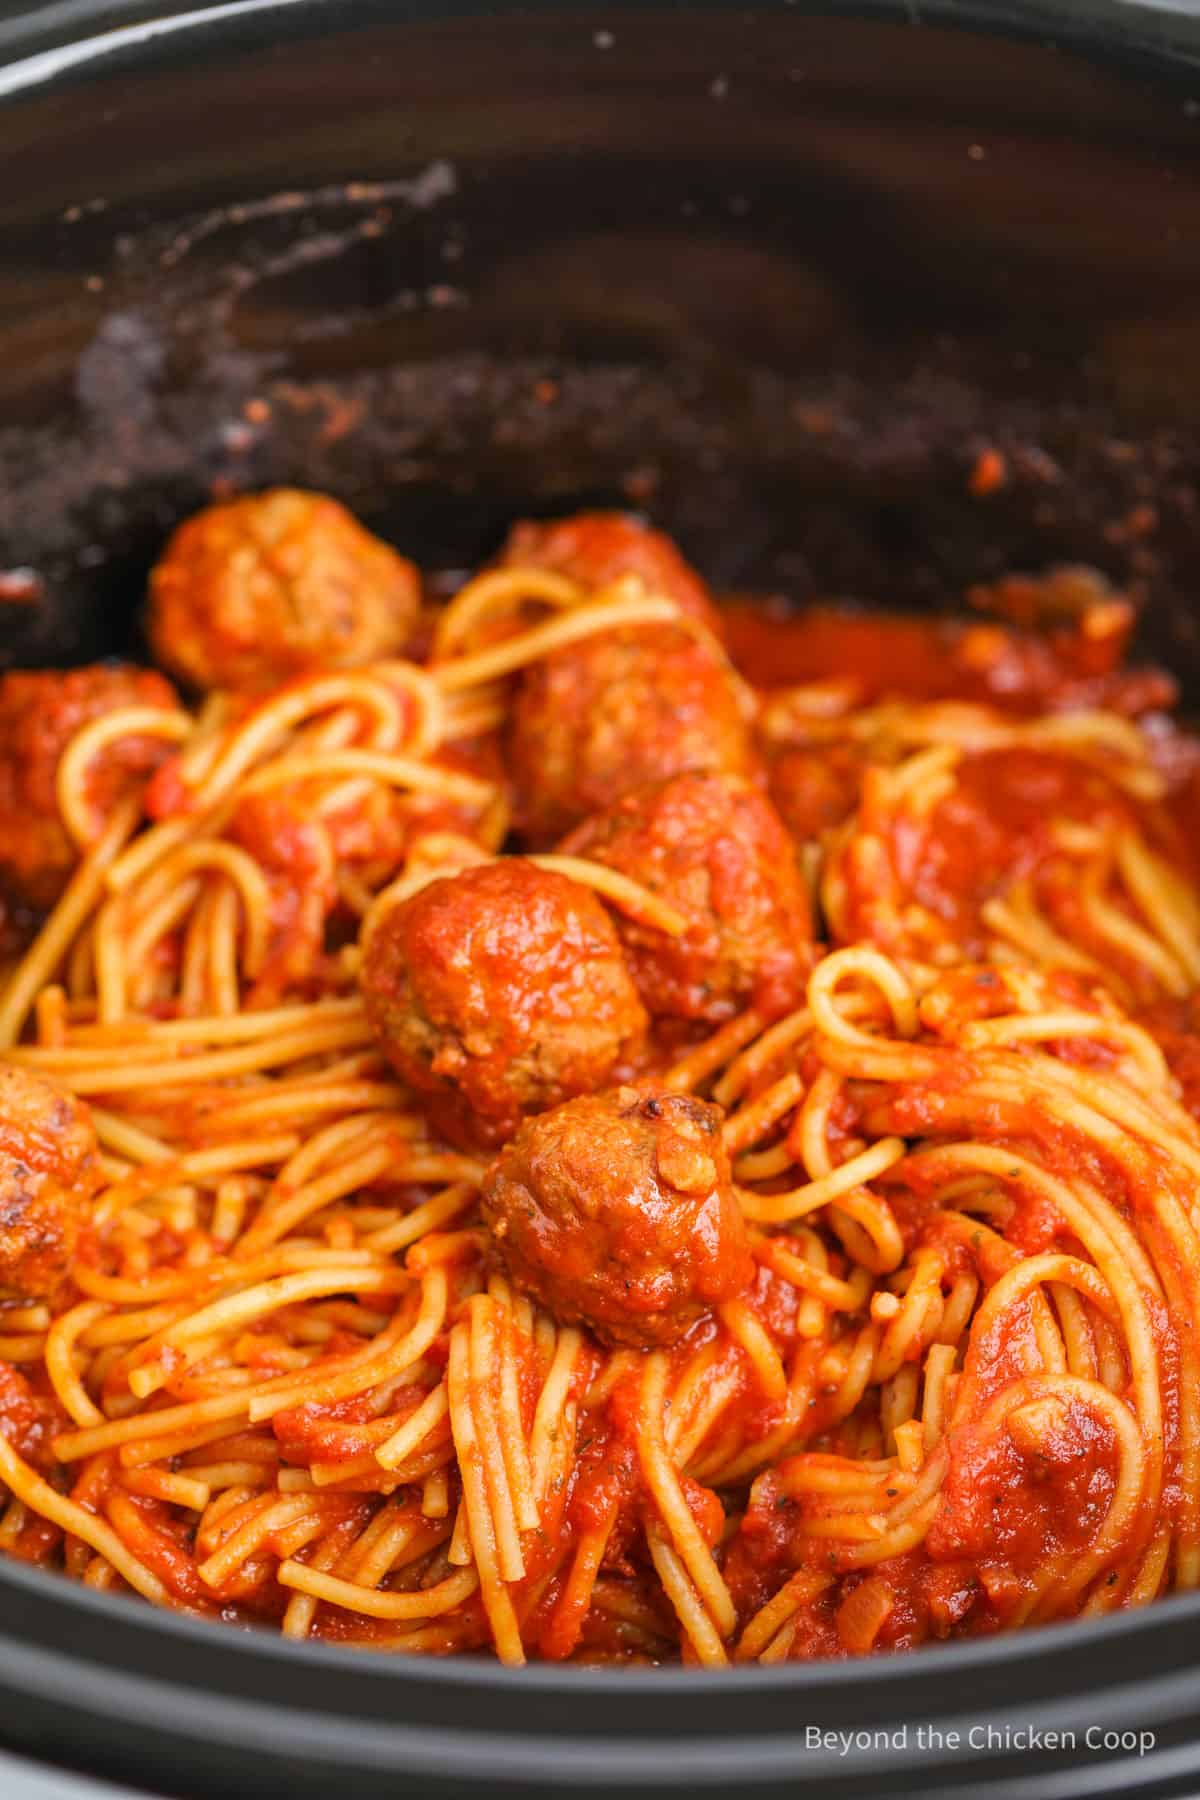 Spaghetti and meatballs in a crock pot. 